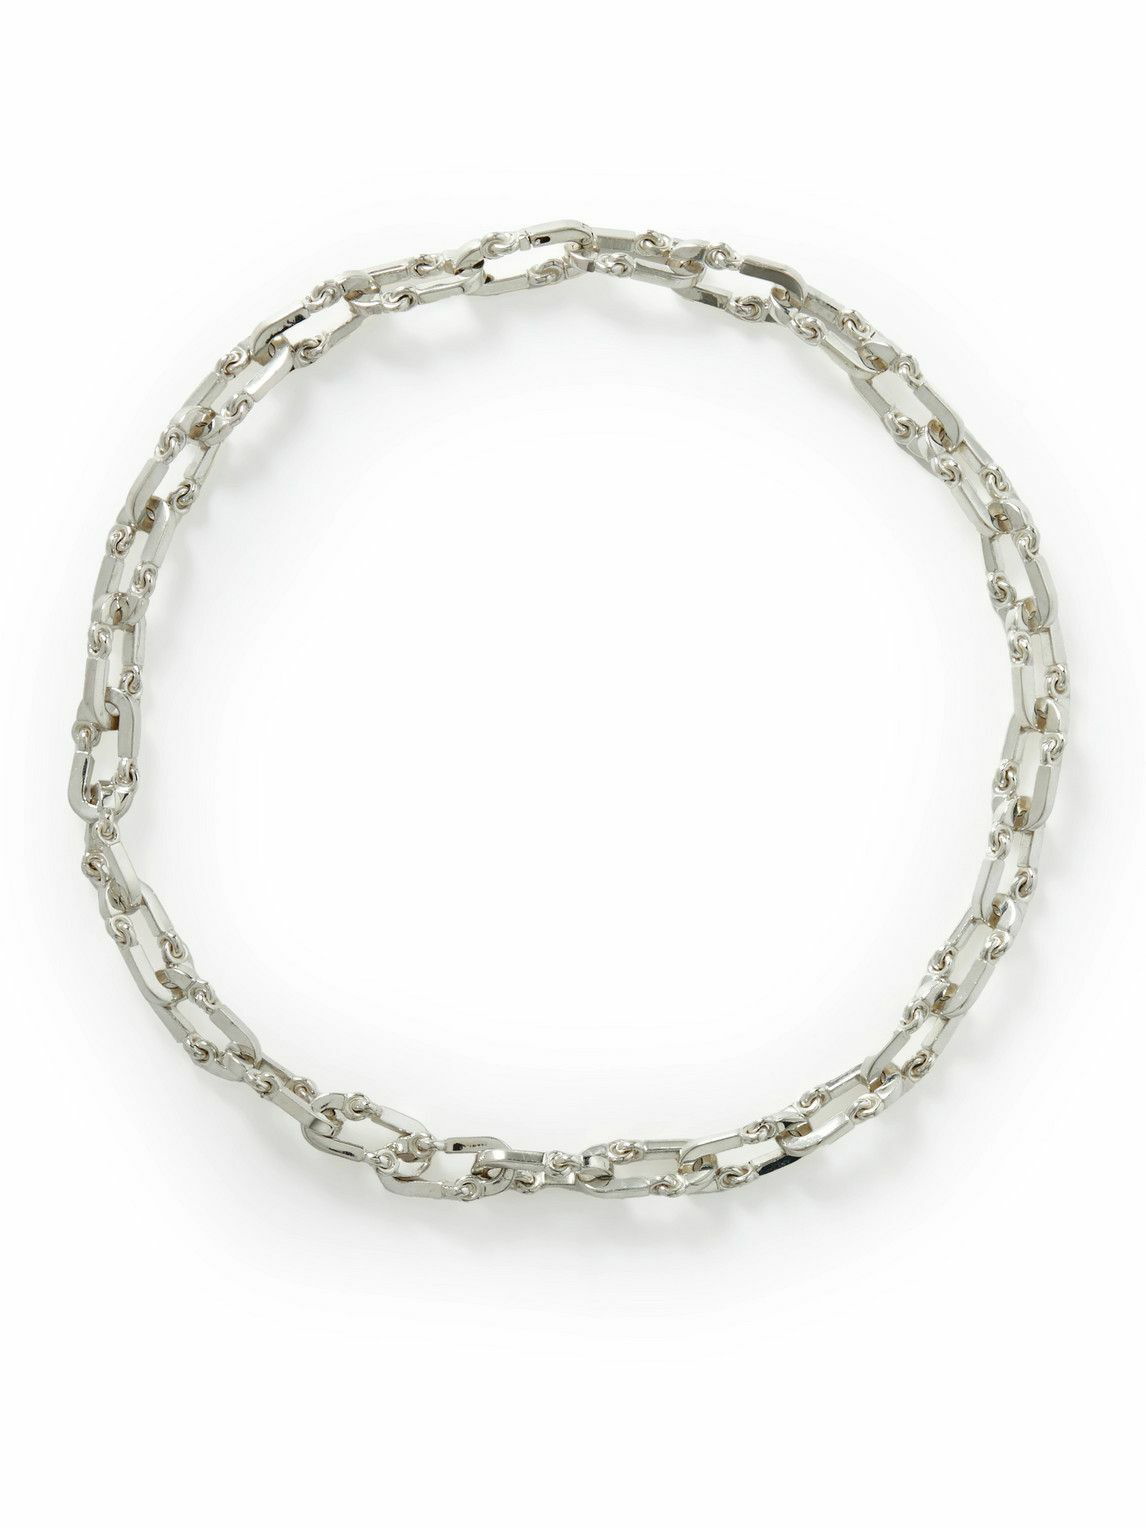 Photo: M. Cohen - Perihelion Sterling Silver Chain Necklace